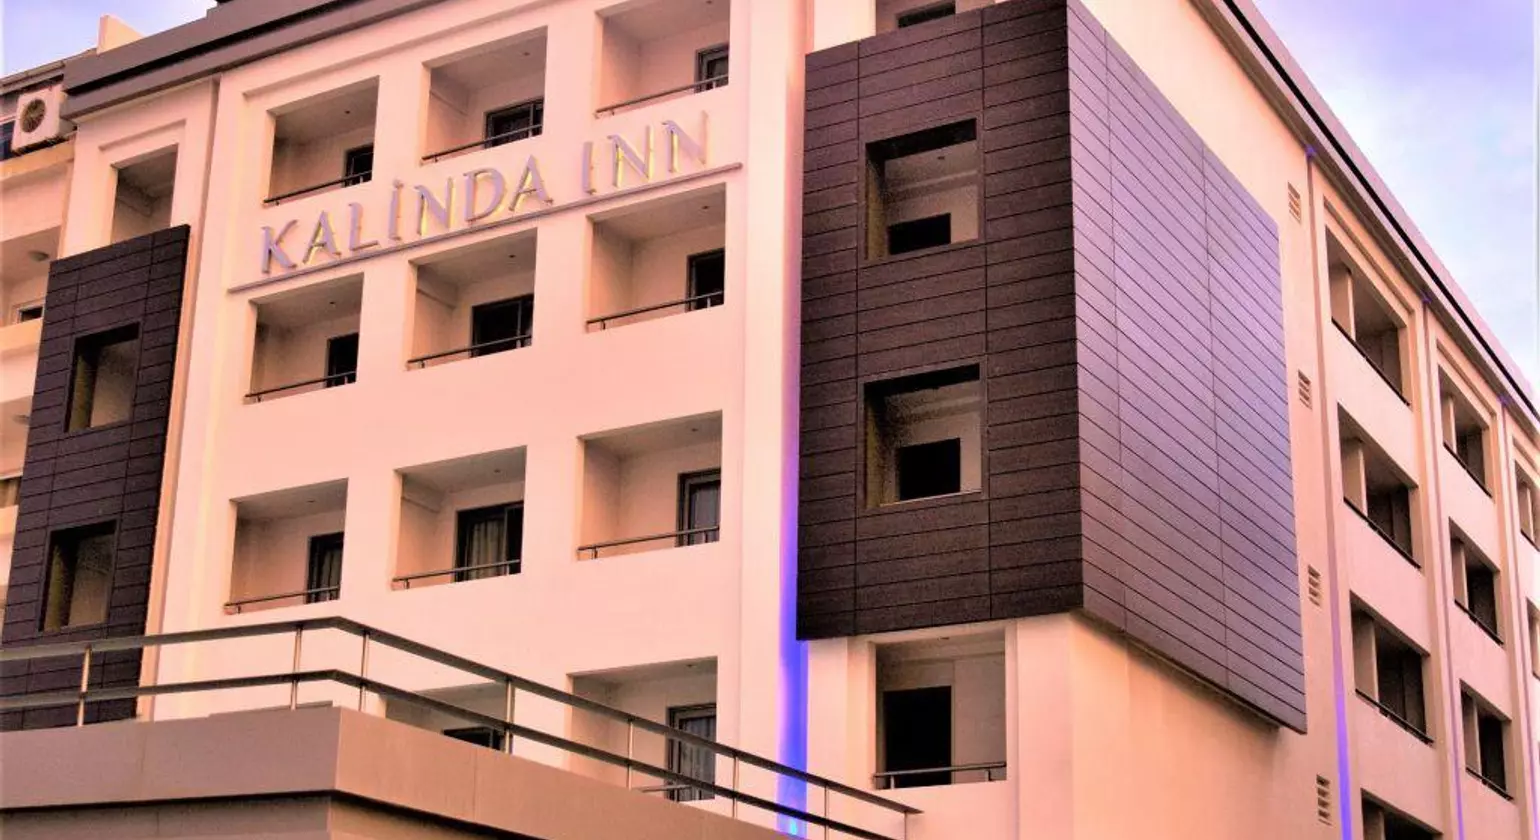 Kalinda Inn Hotel